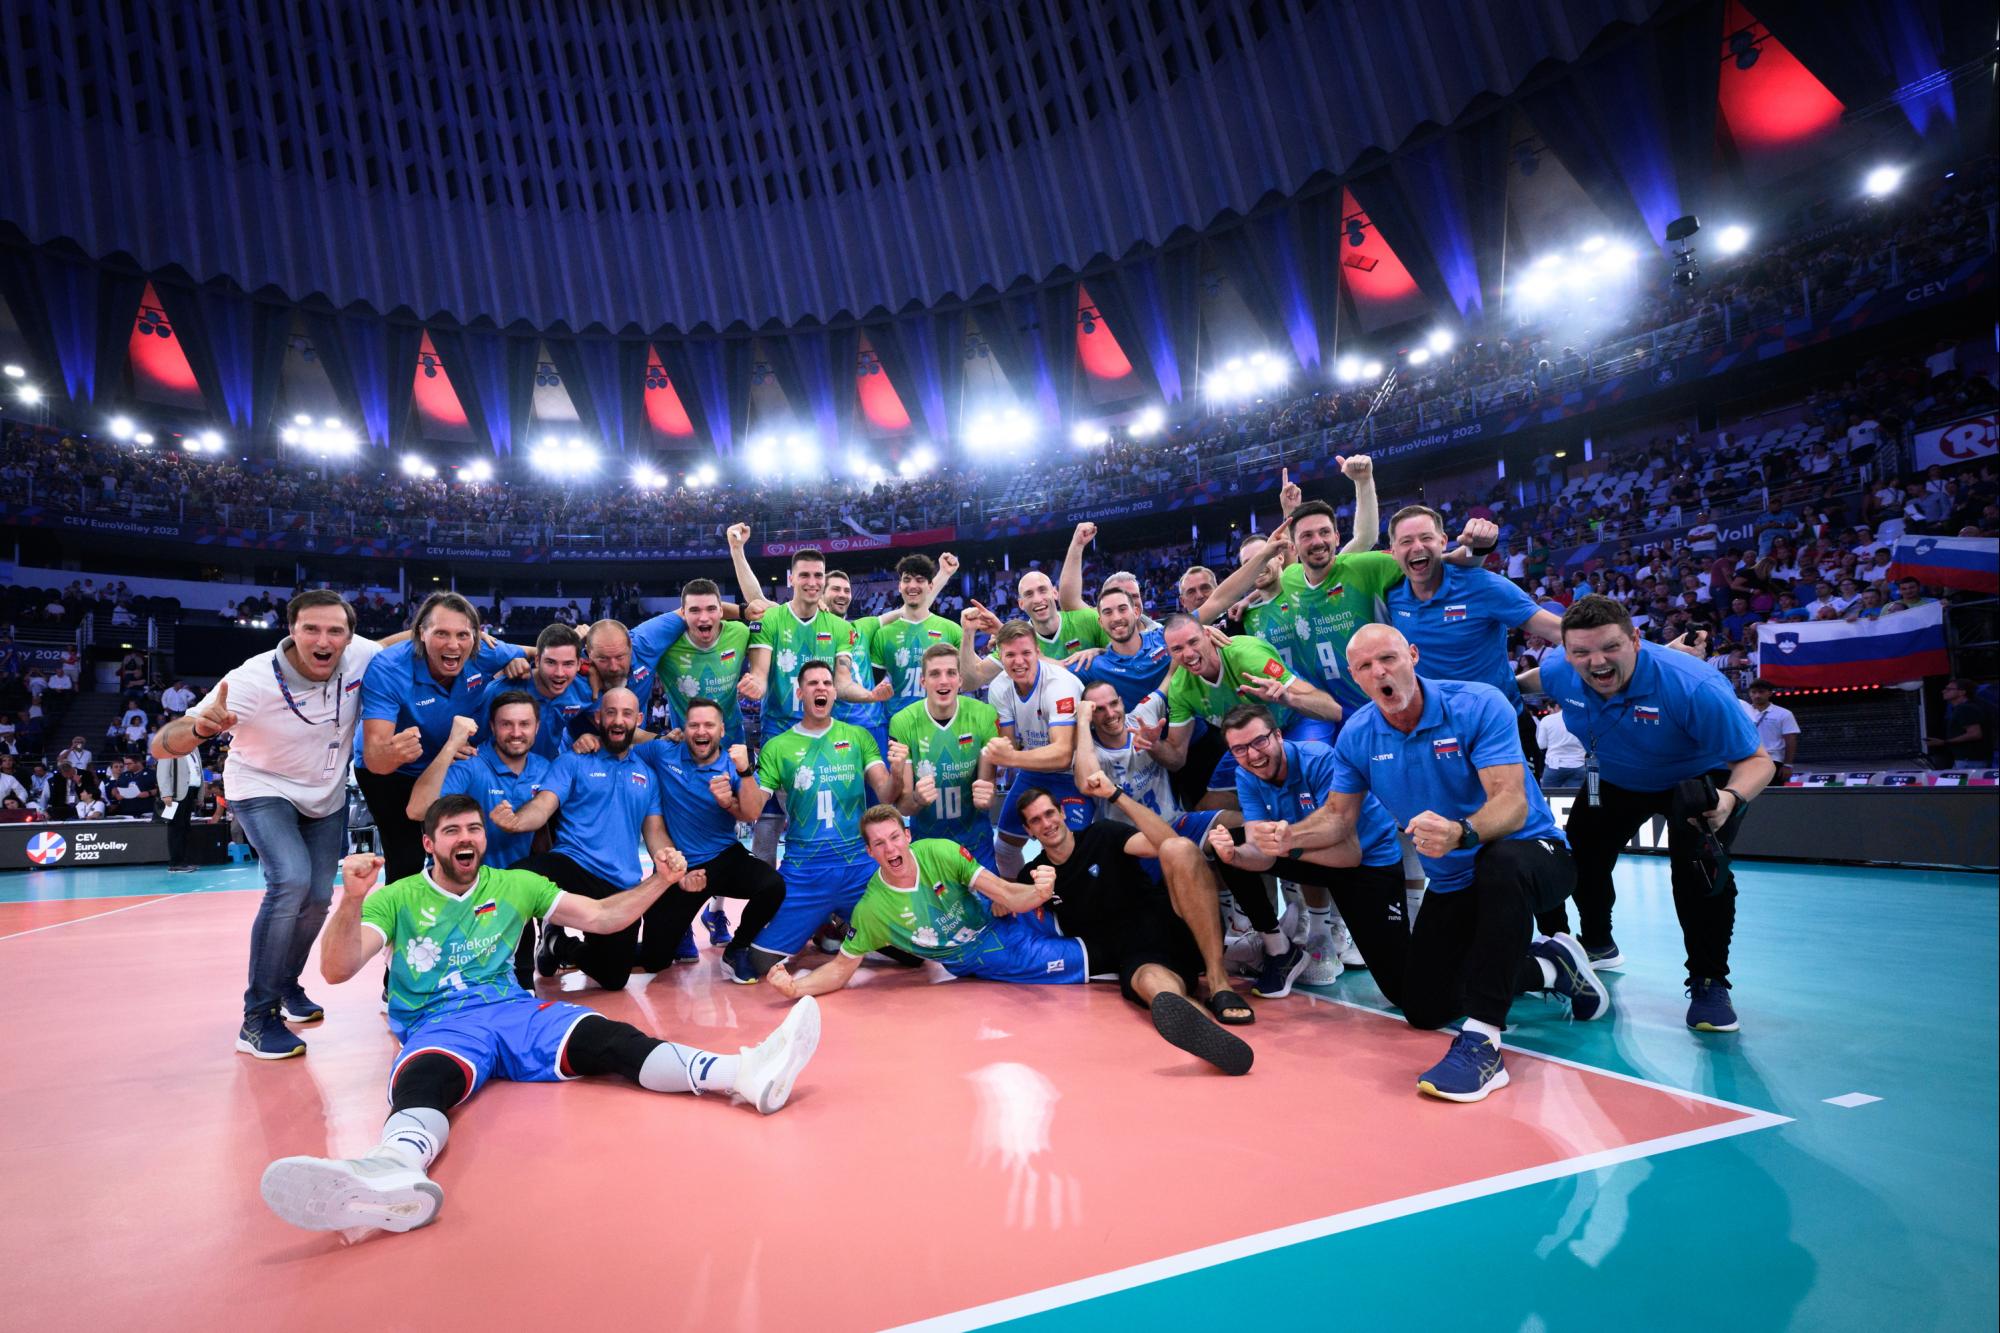 CEV, VolleyballWorld, ParaVolleyEurope, Aleš Oblak